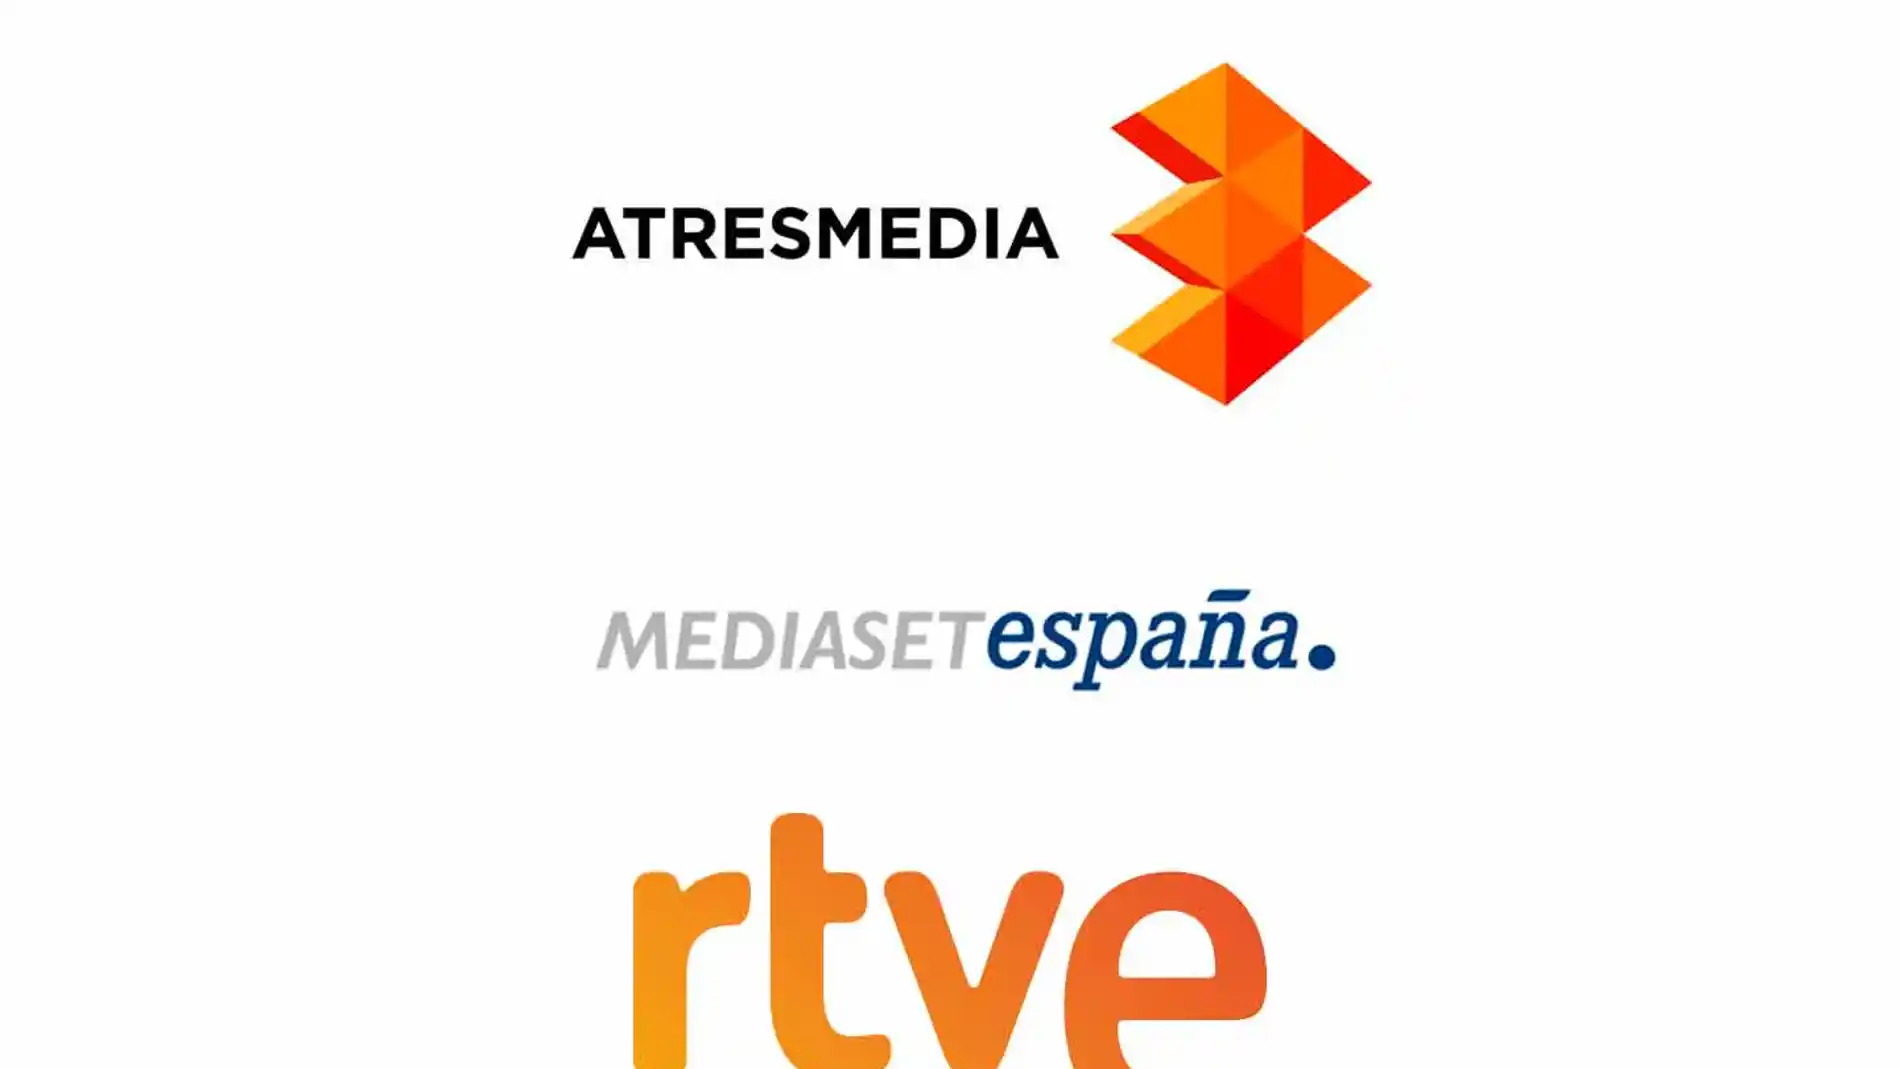 Acuerdo entre Atresmedia, RTVE y Mediaset España